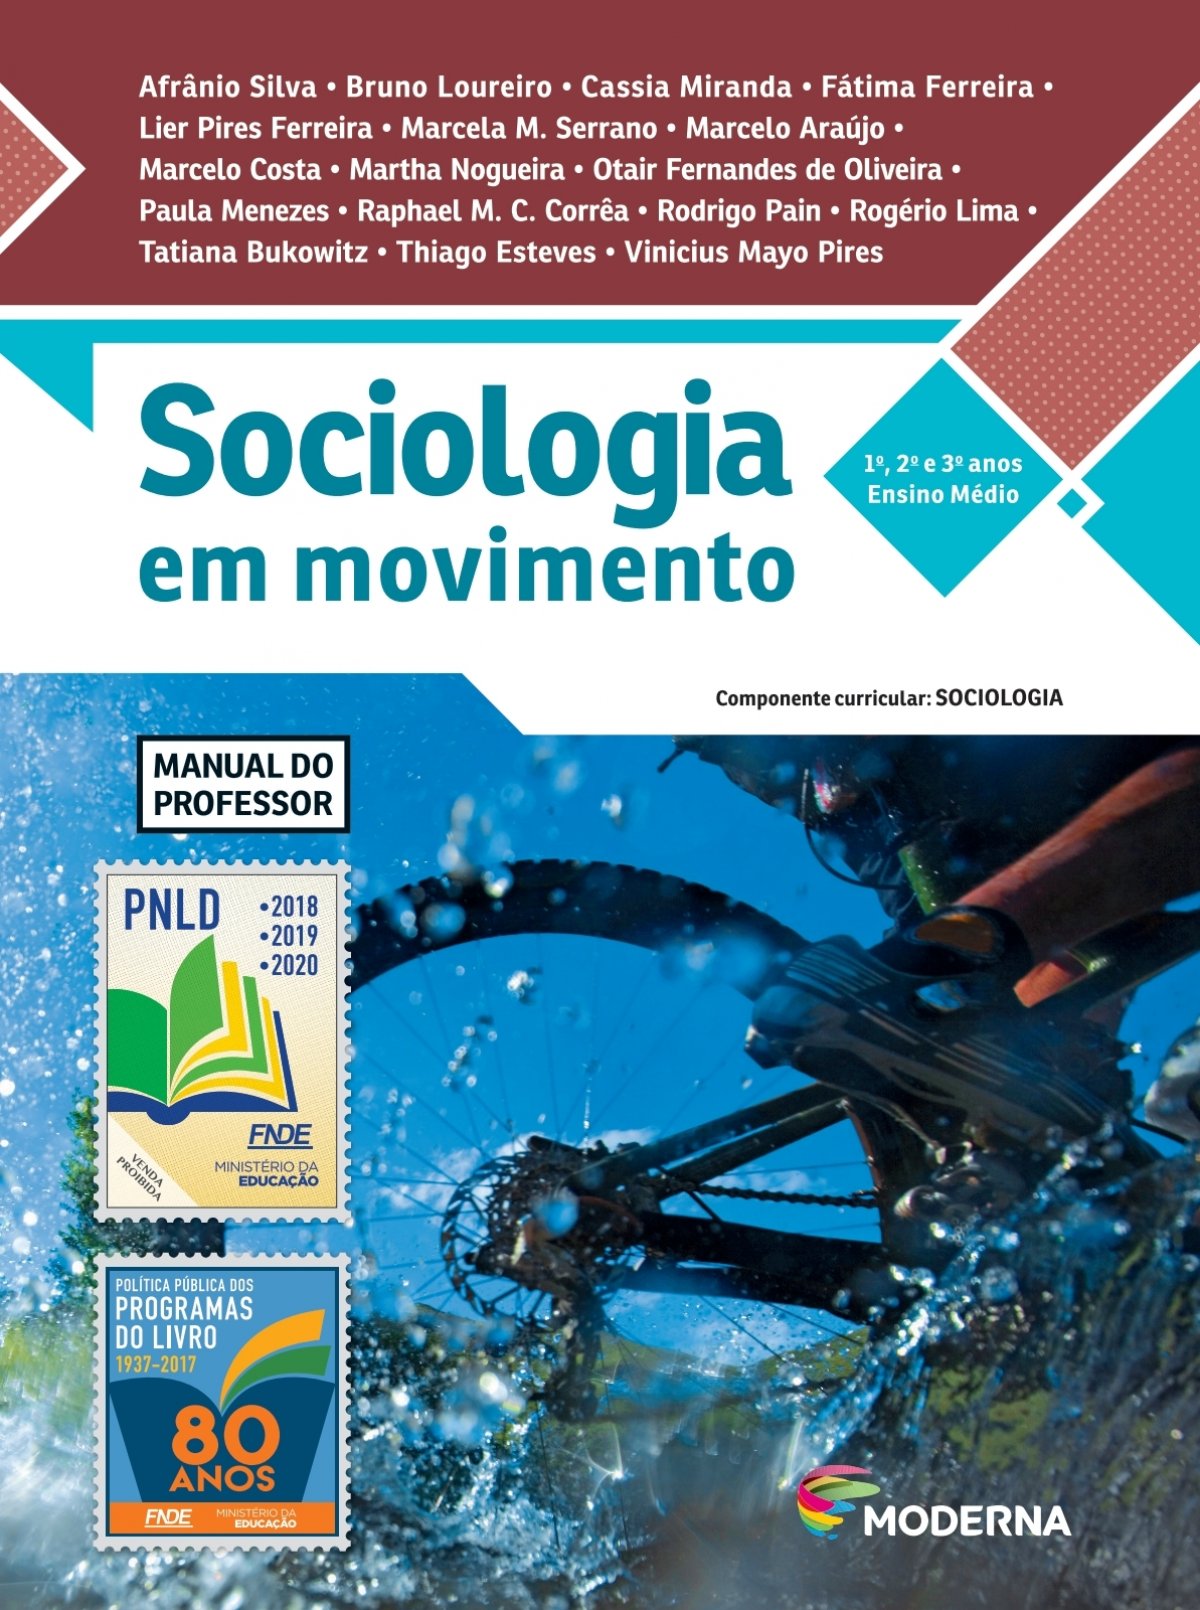 Calaméo - Jornal de Santarém de 25 a 31 de Março de 2011